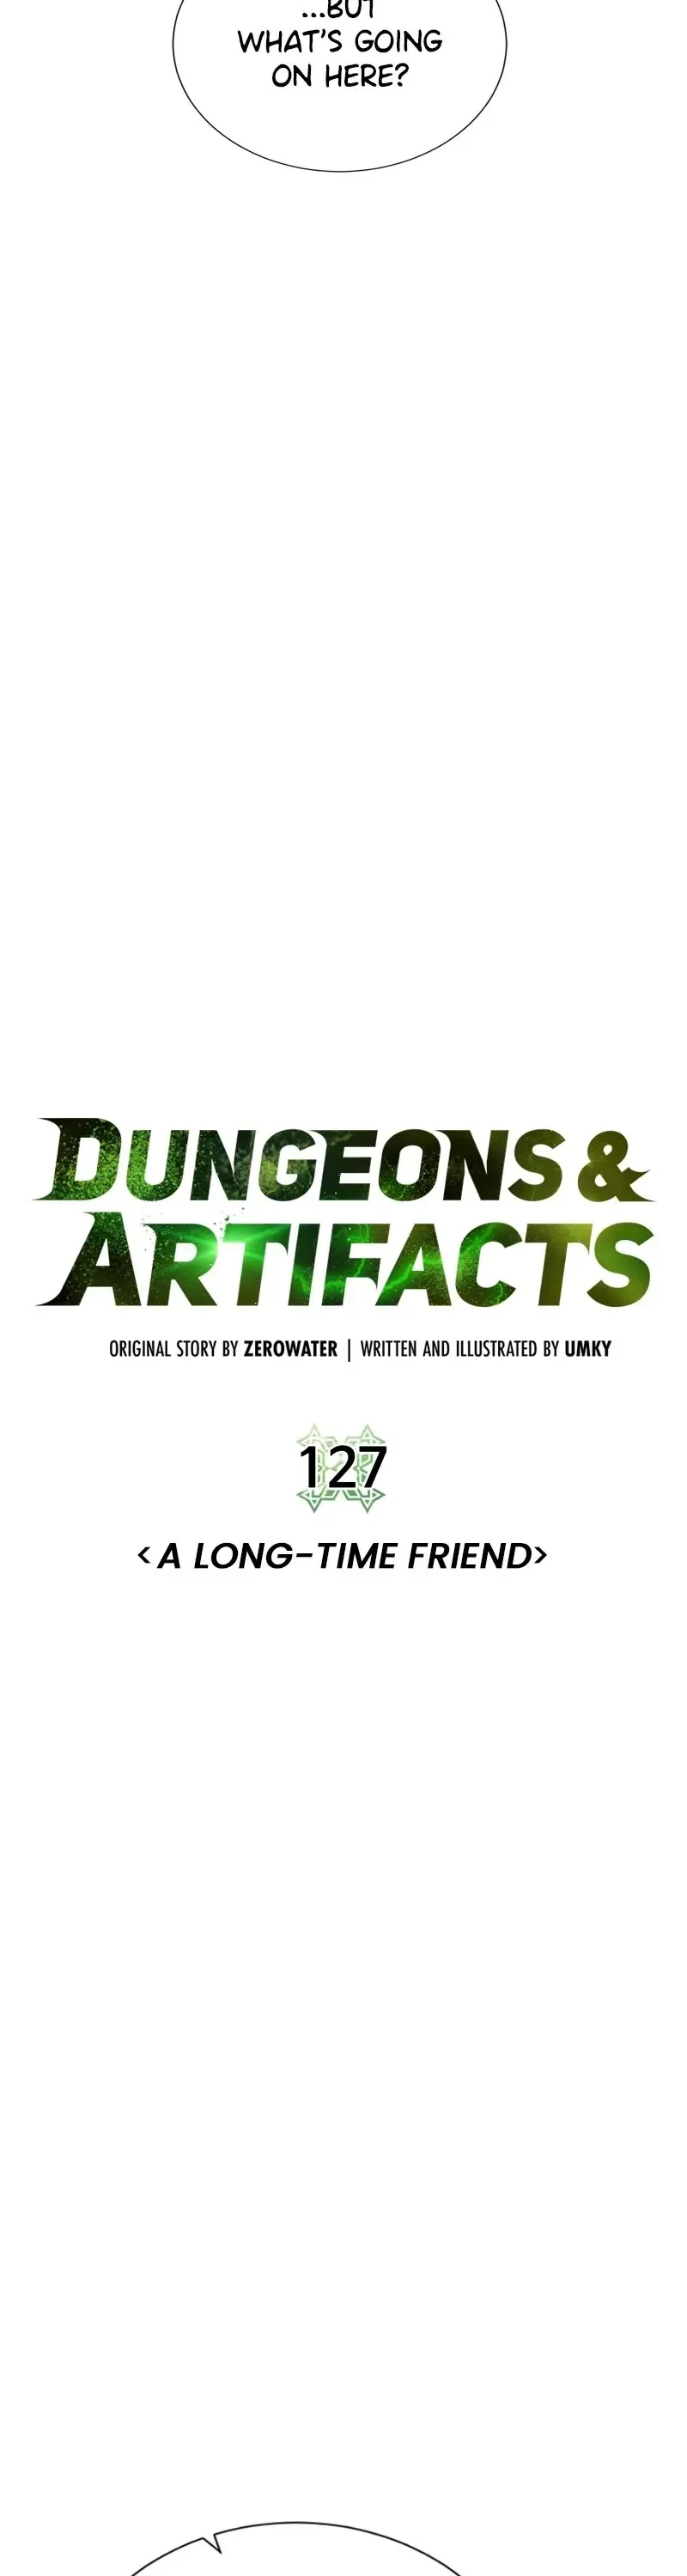 dungeons-artifacts-chap-127-10